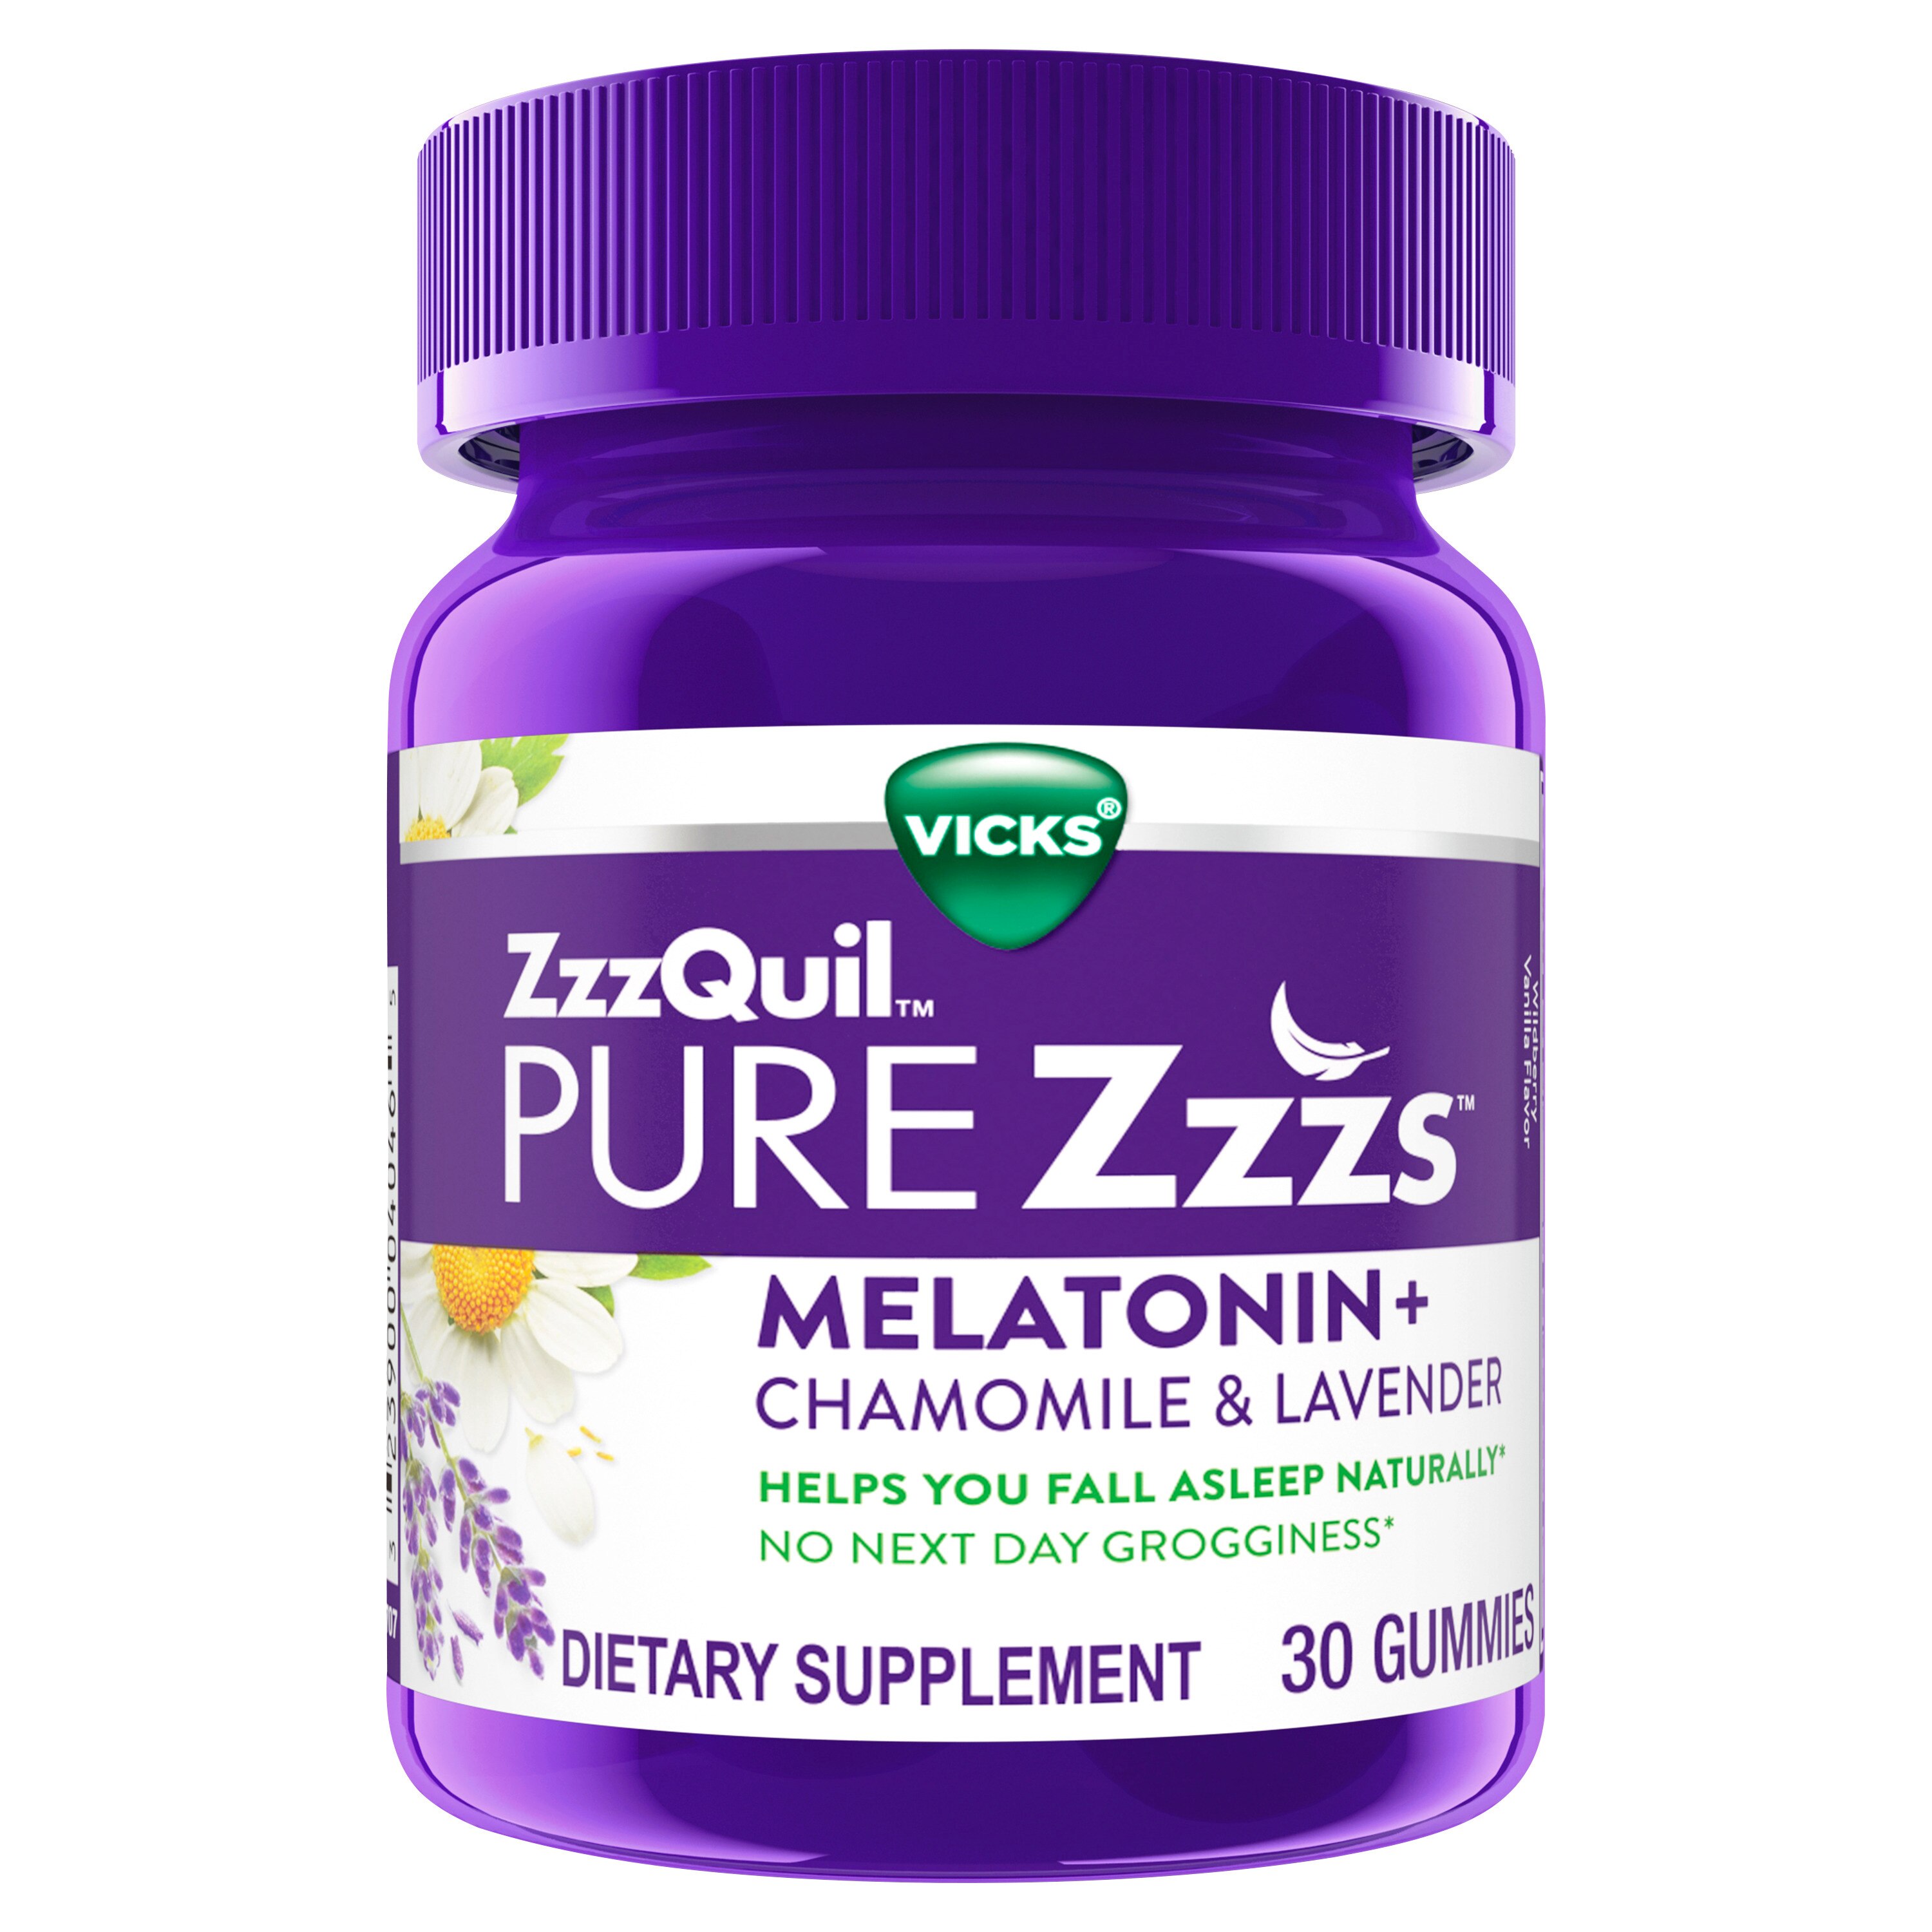 Vicks PURE Zzzs Nightly Sleep Melatonin Sleep Aid gummies with Chamomile, Lavender, & Valerian Root, 1mg per gummy, 30 CT